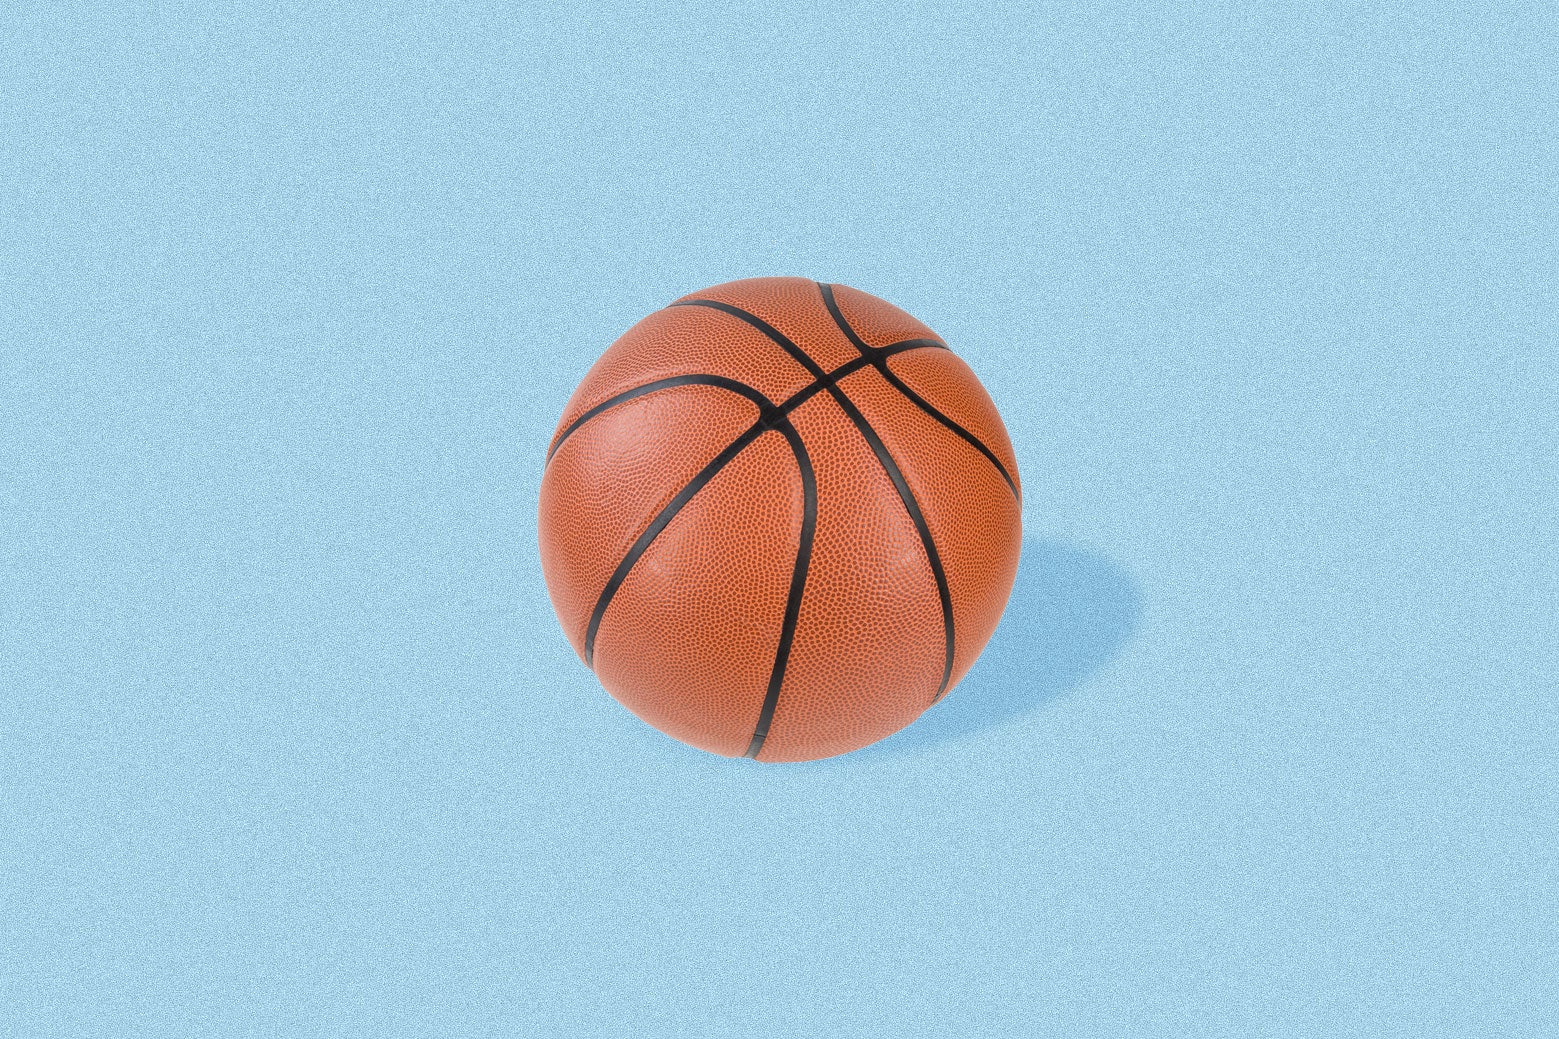 A basketball.